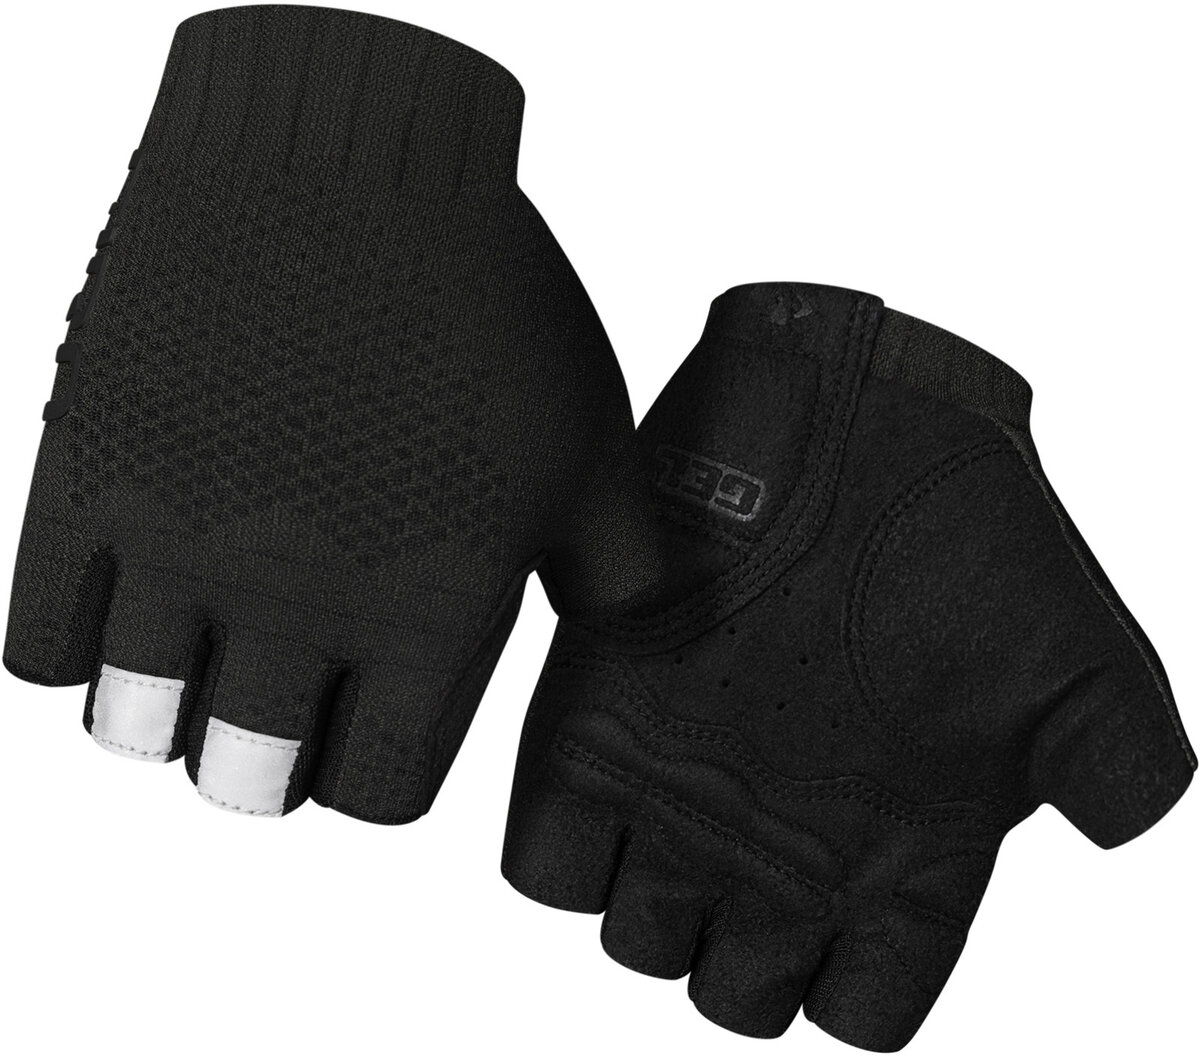 Giro Xnetic Road Men's Road Cycling Gloves 